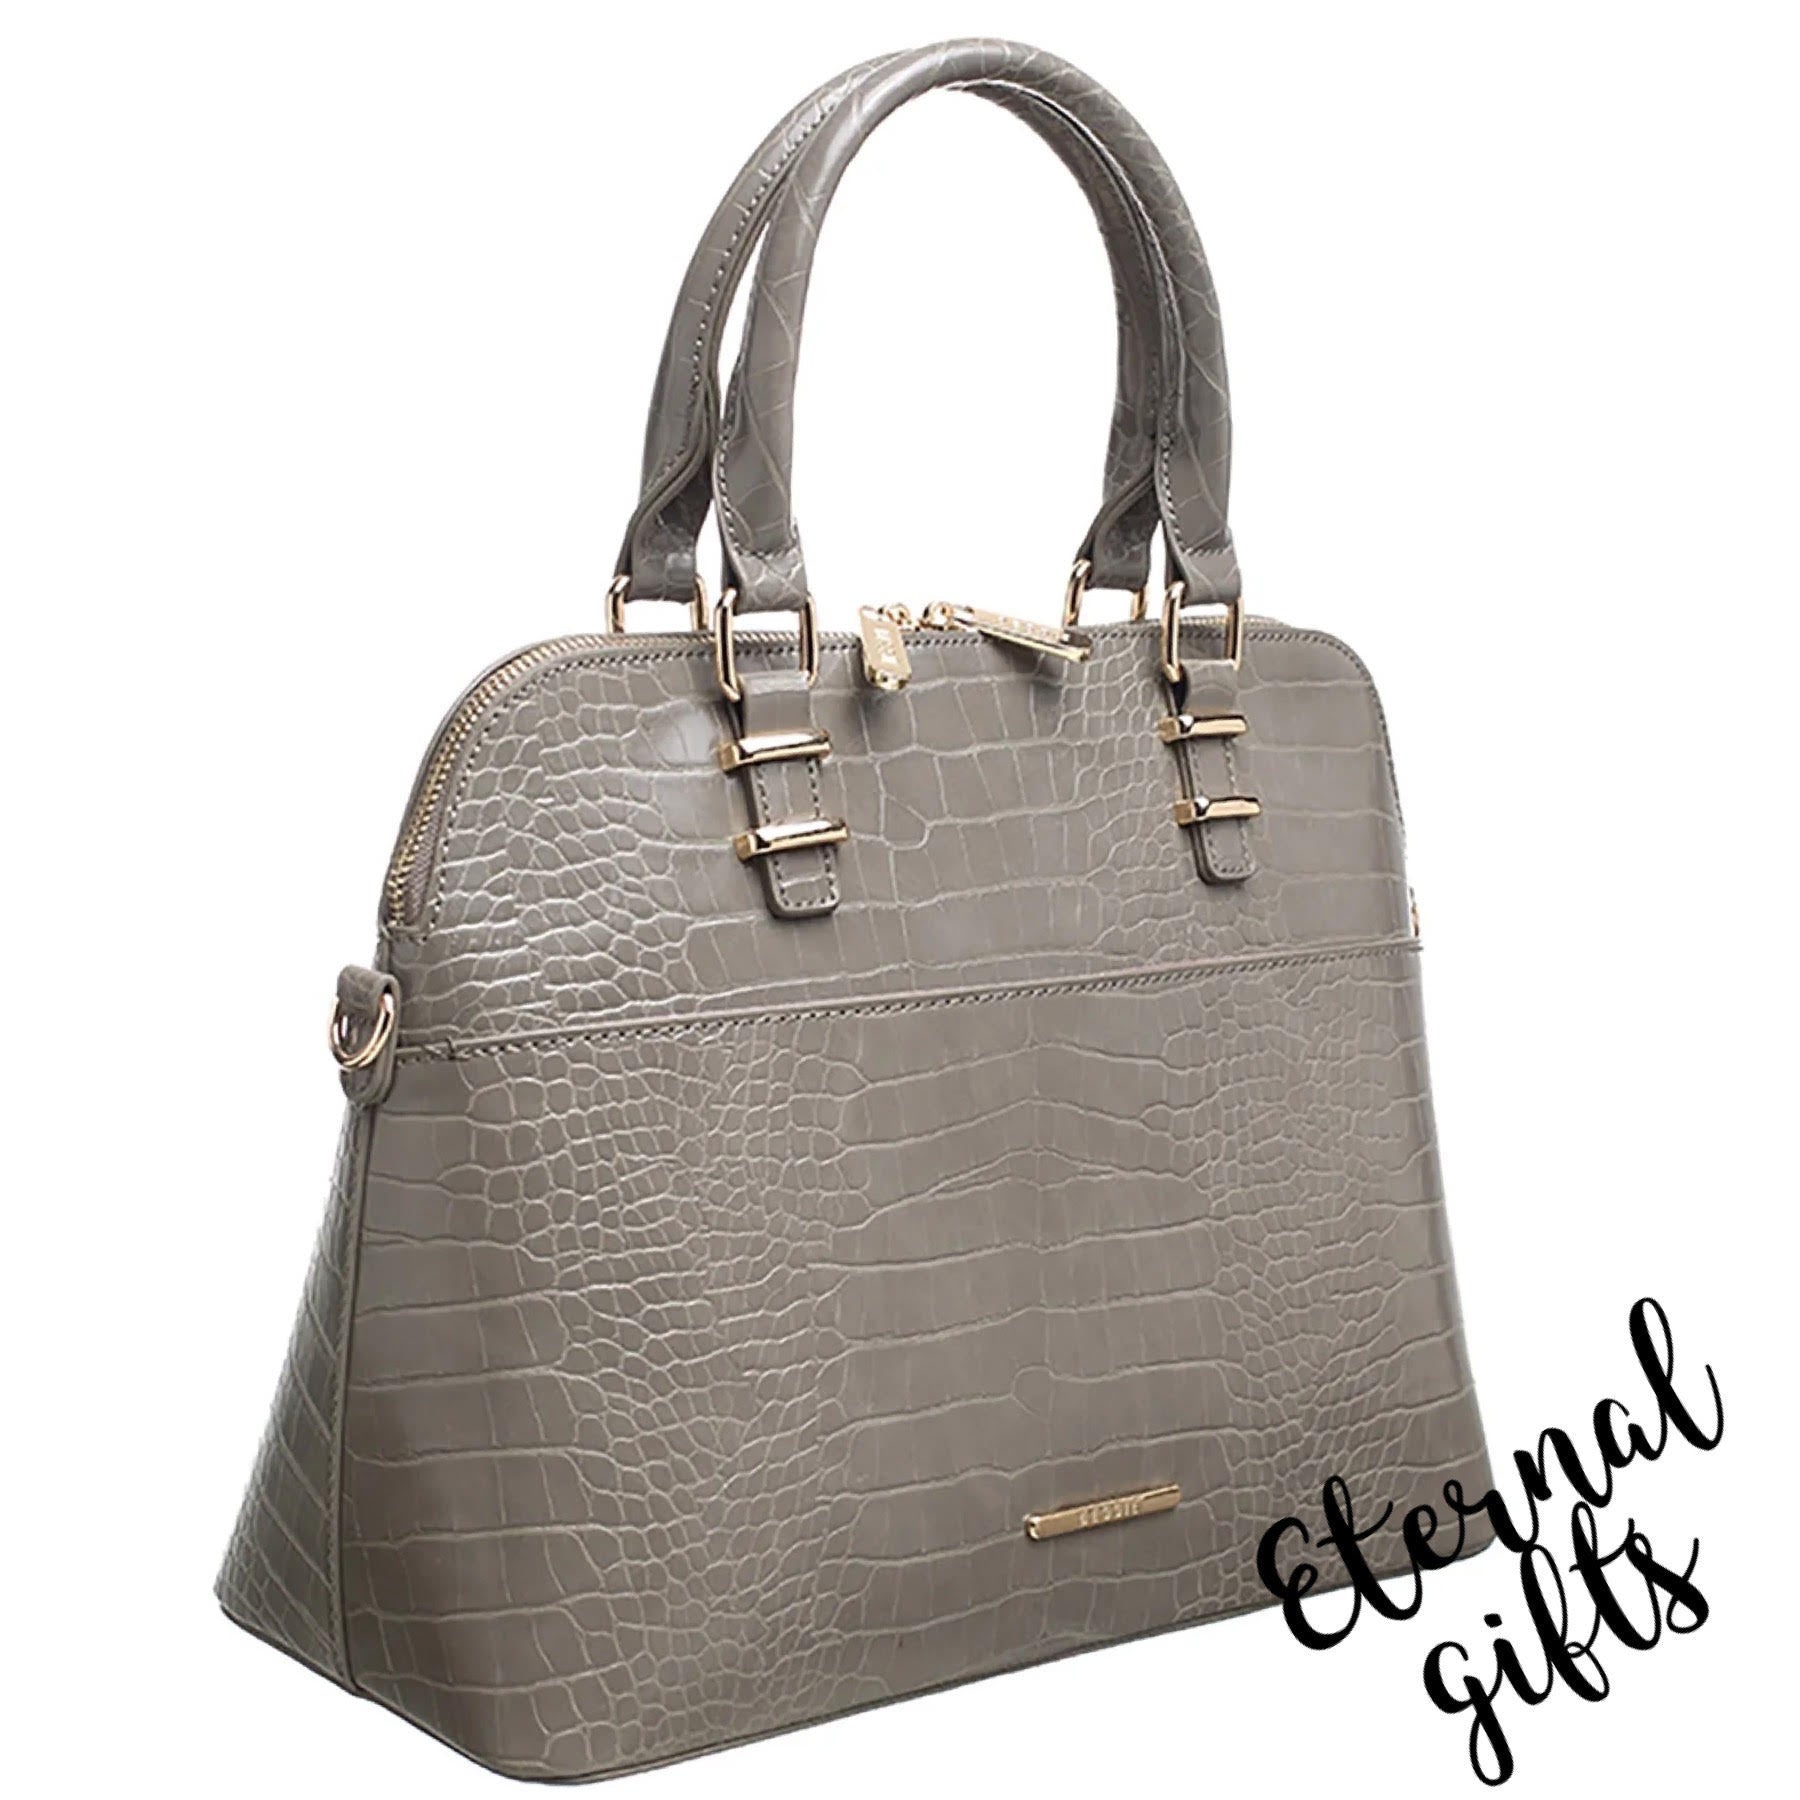 The Helena Handbag in Khaki/Grey by Bessie